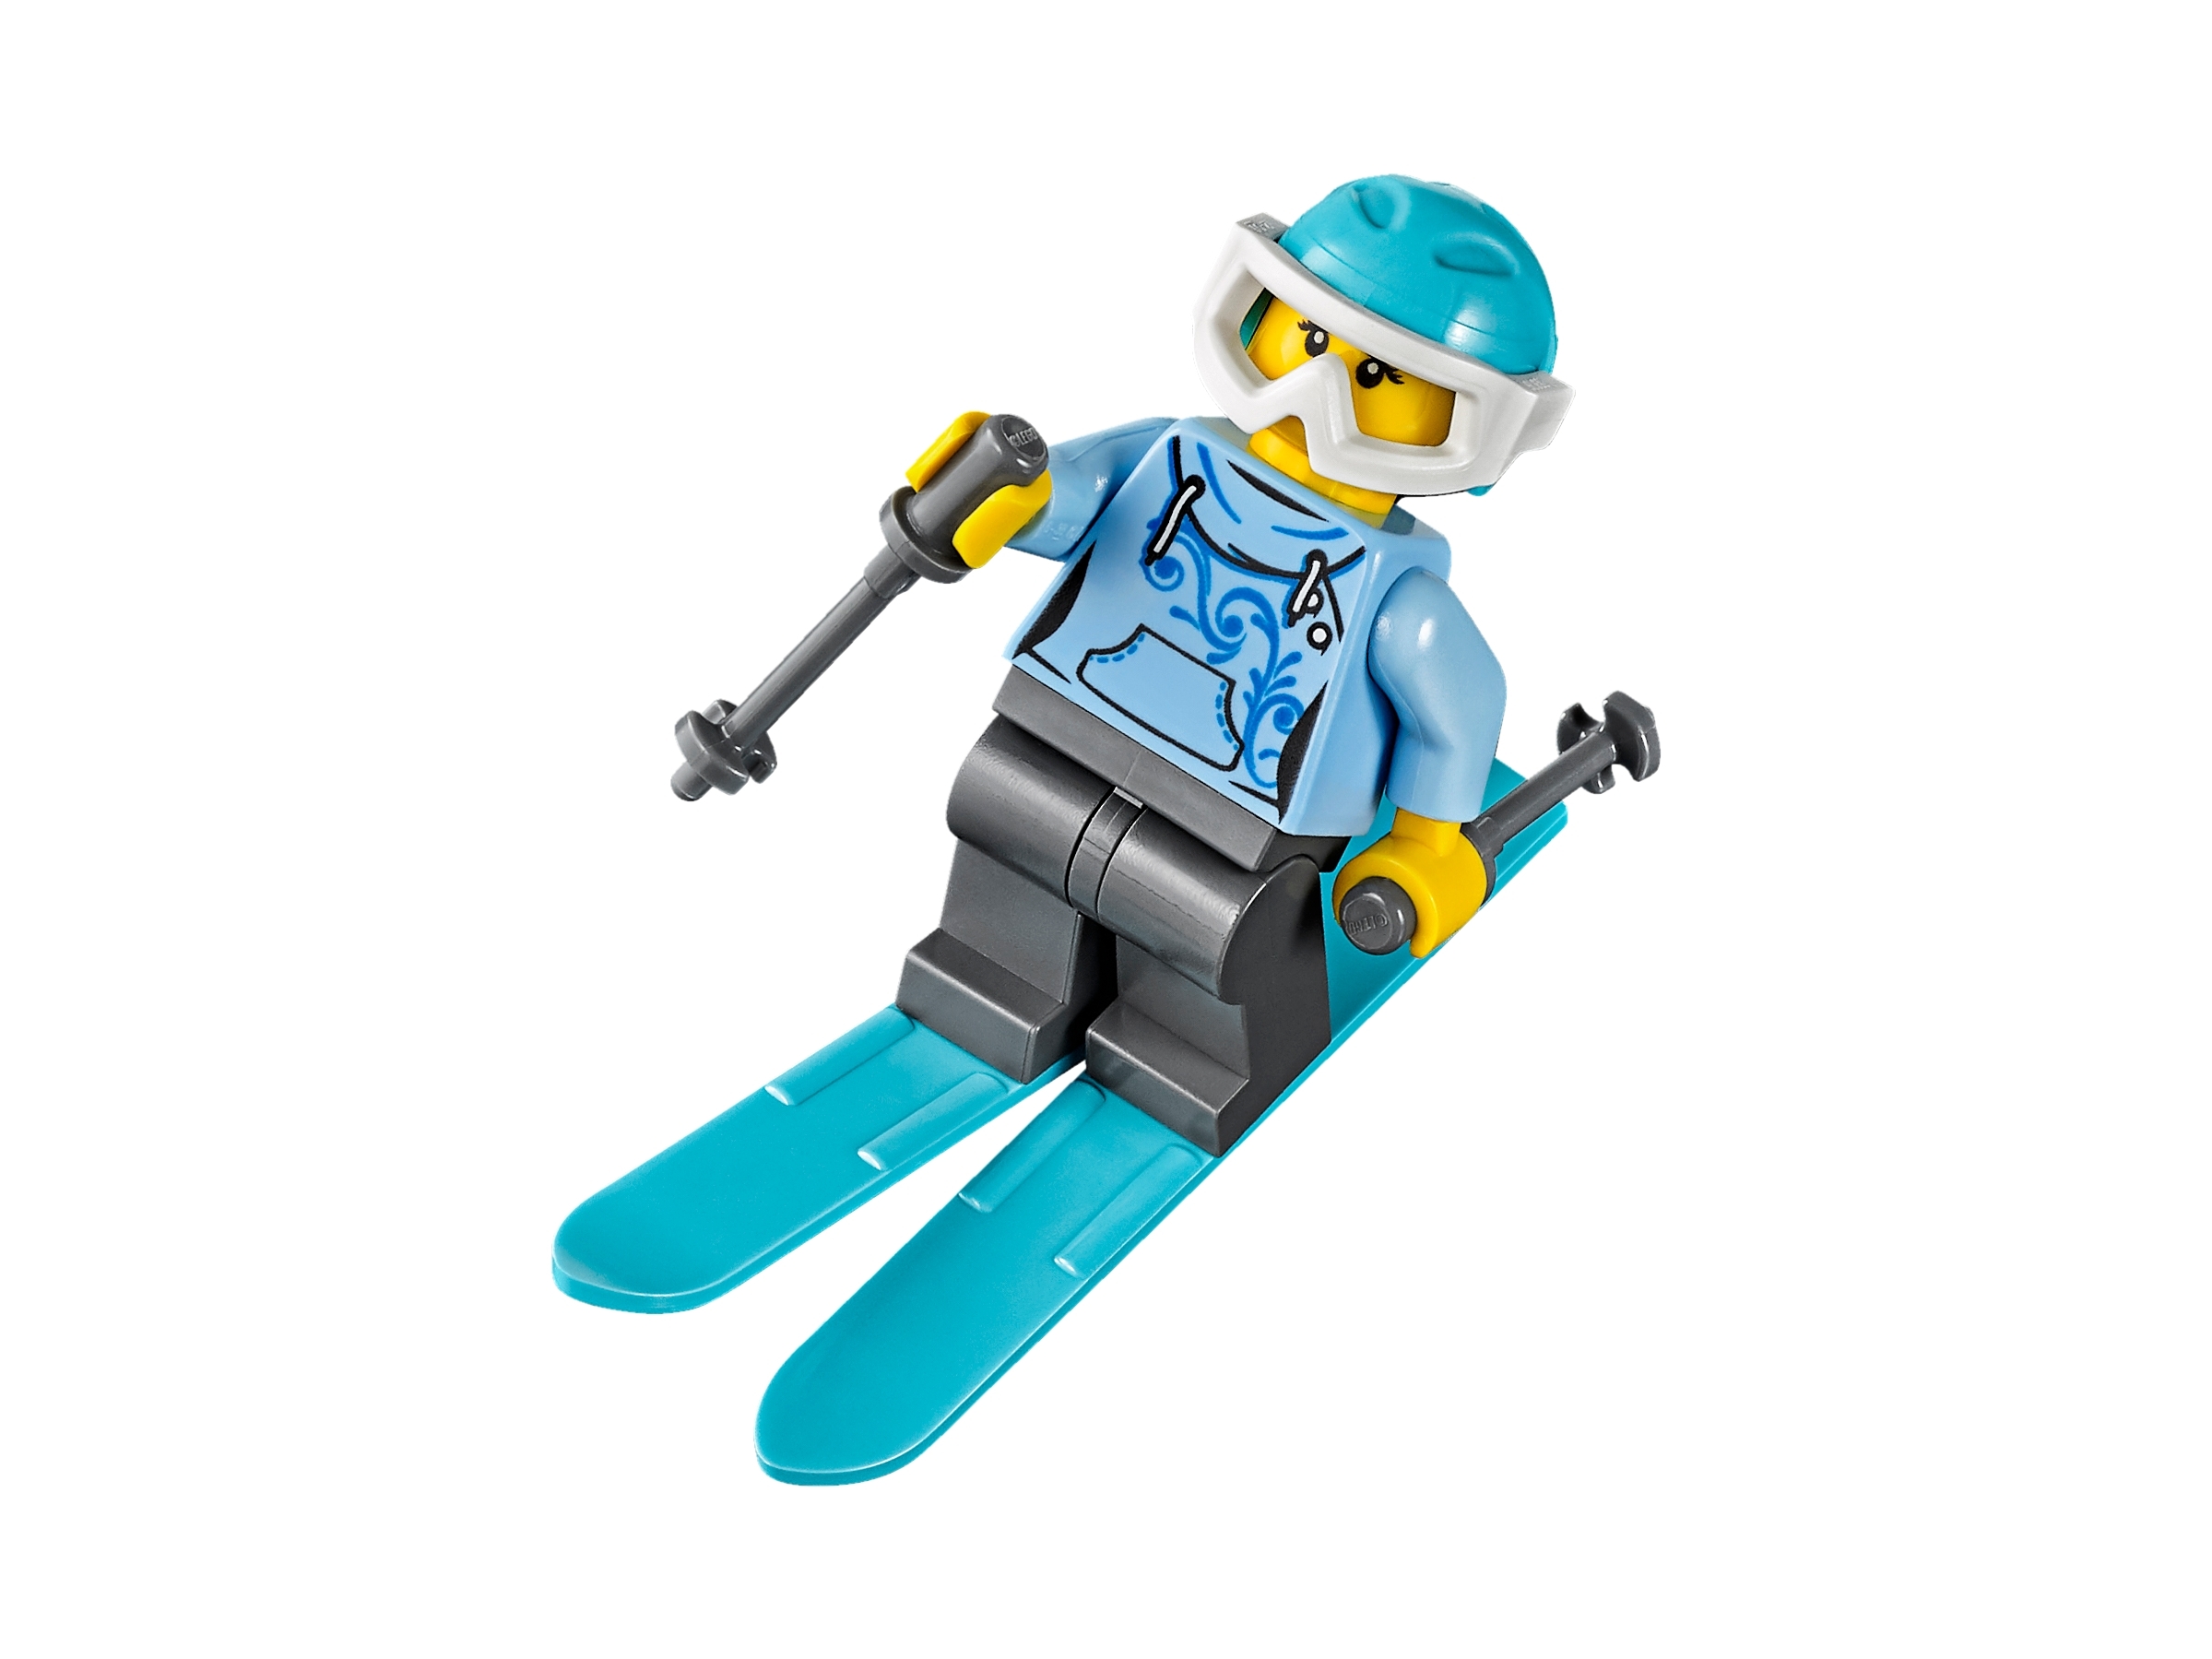 Ski Resort 60203 | City | Buy at the Official LEGO® Shop US